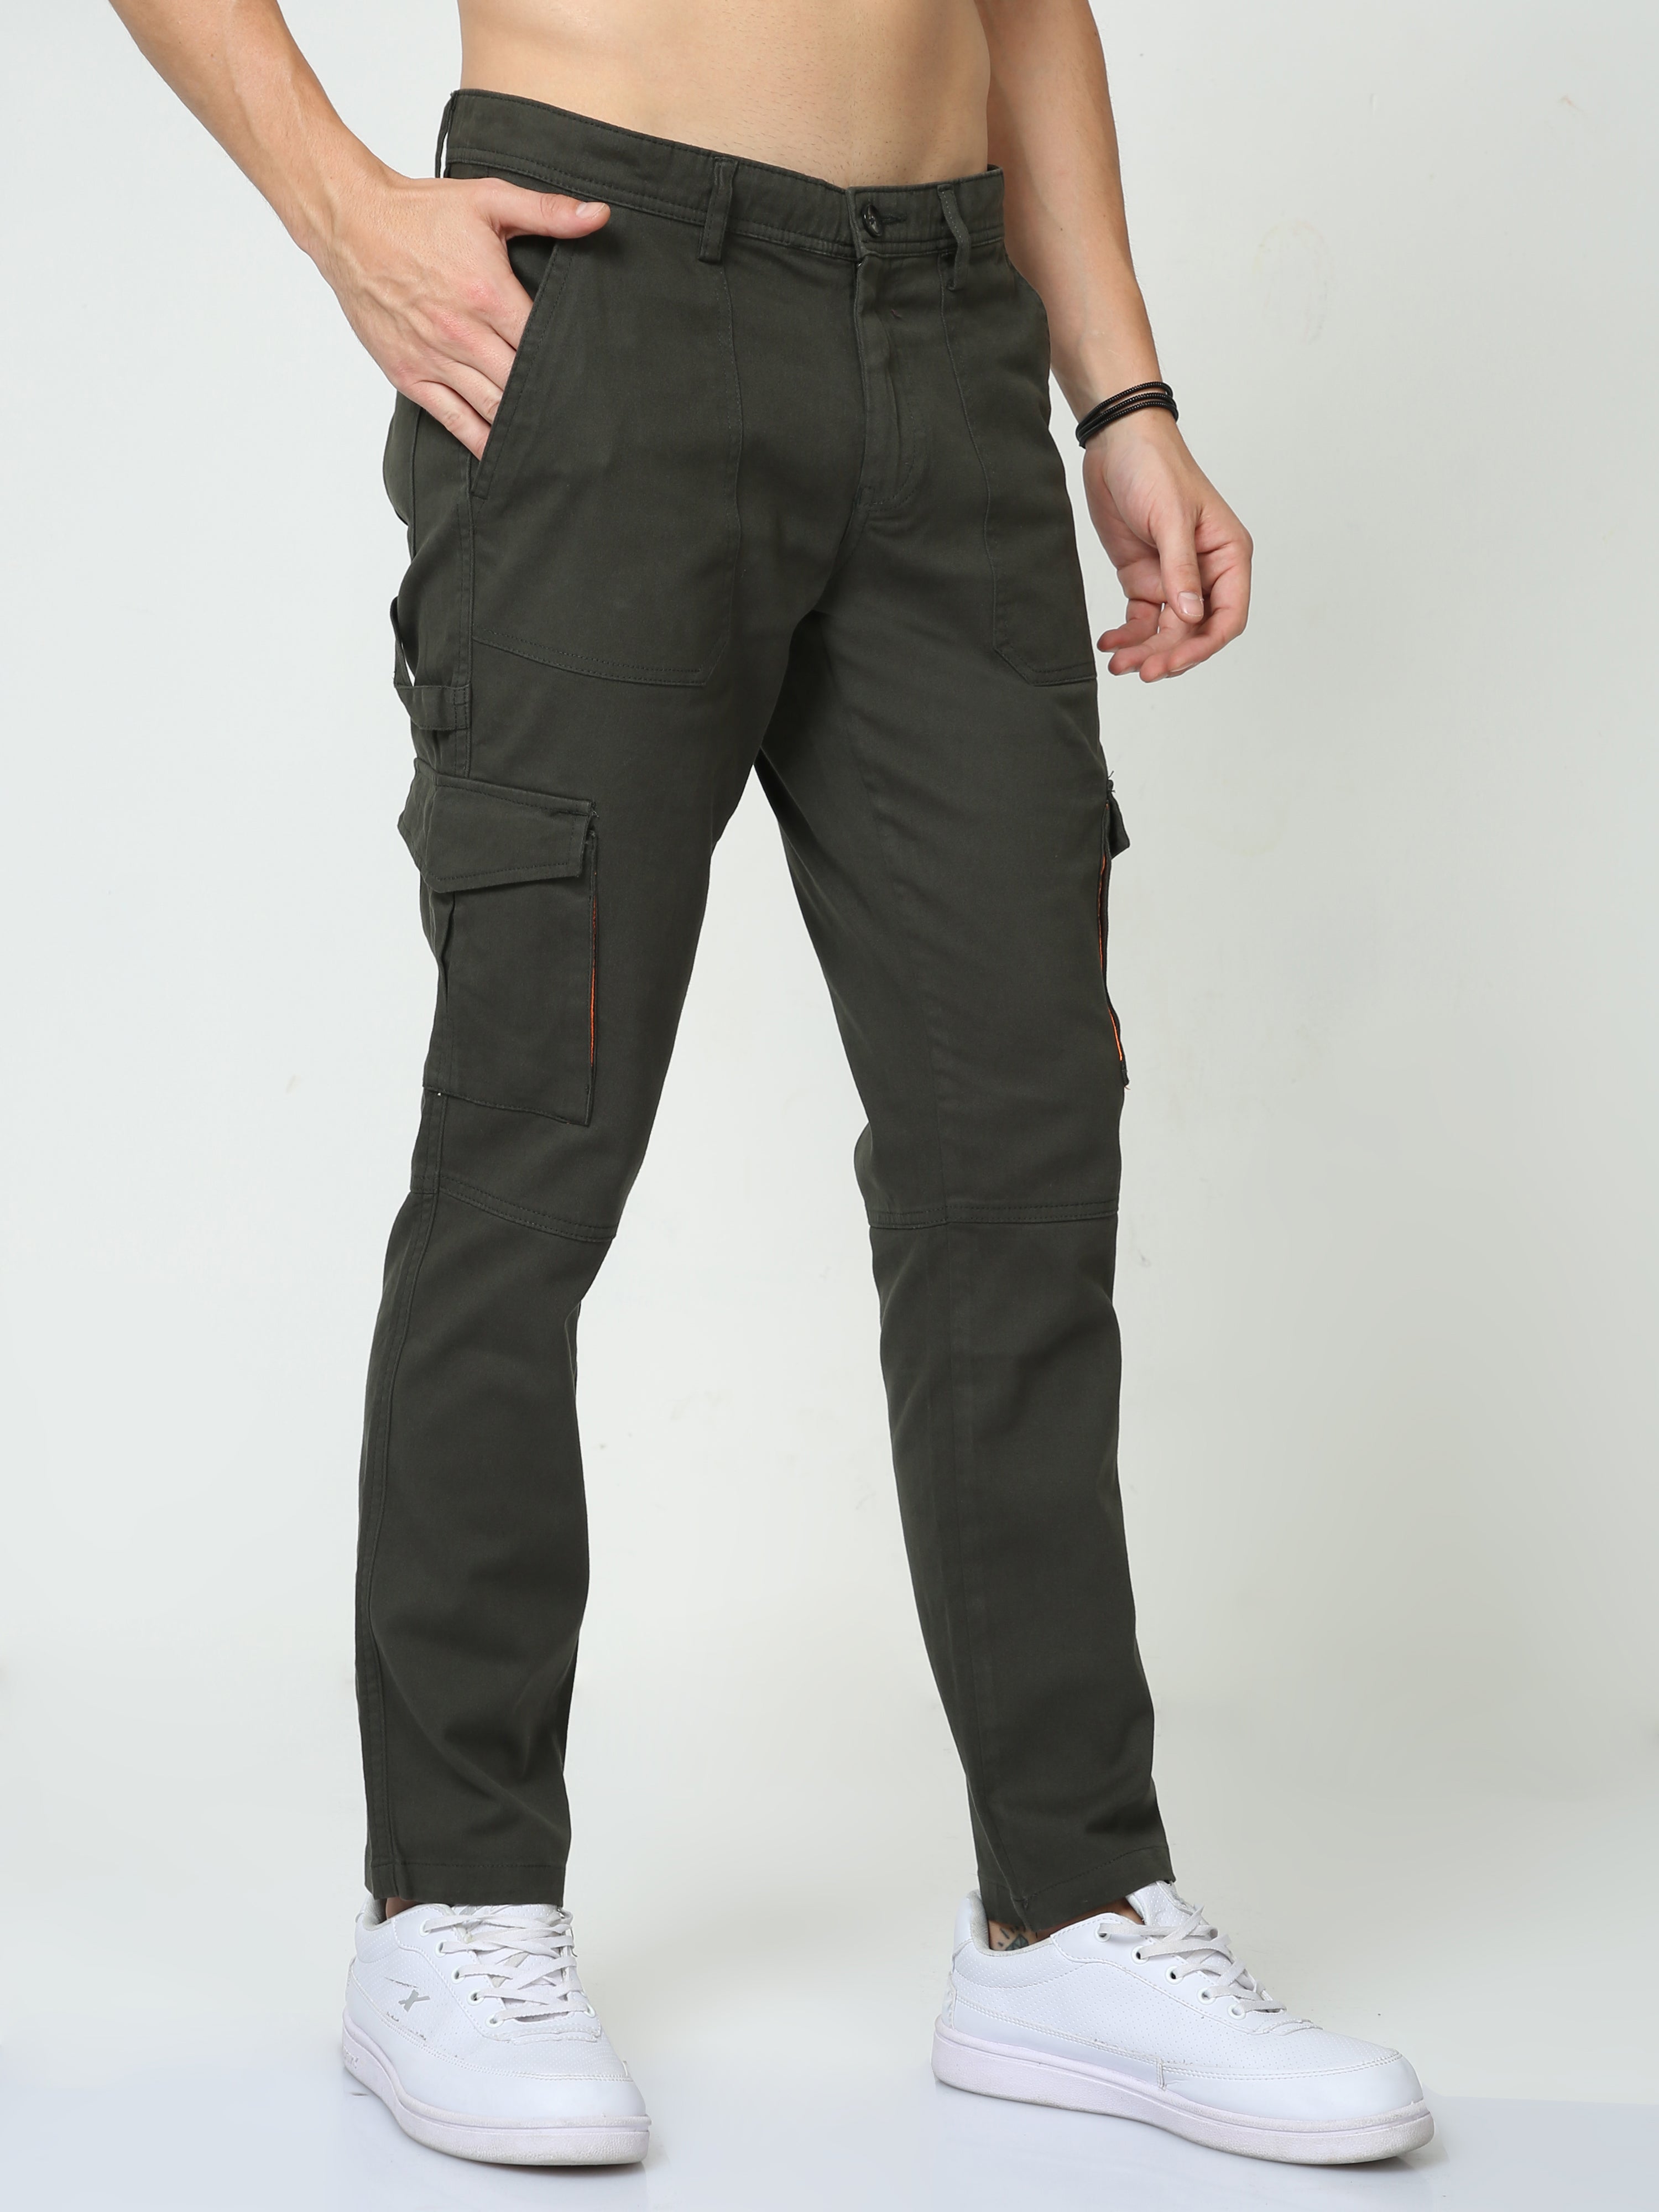 Buy Light Pista Green Baggy Fit Linen Cargo Pants Online | Tistabene -  Tistabene